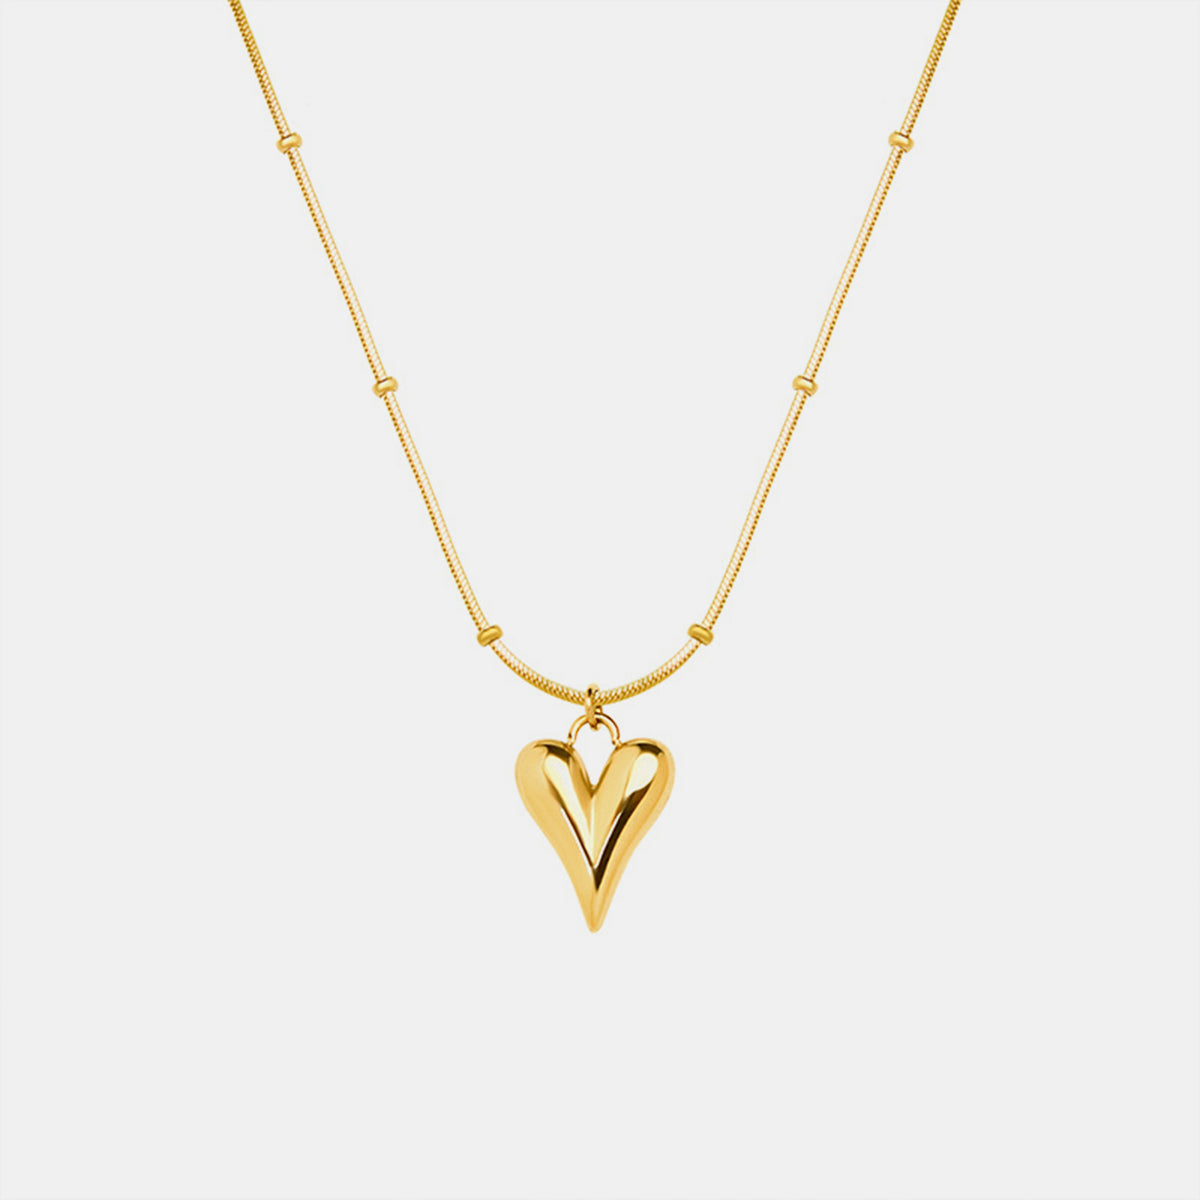 Titanium Steel Heart Pendant Necklace